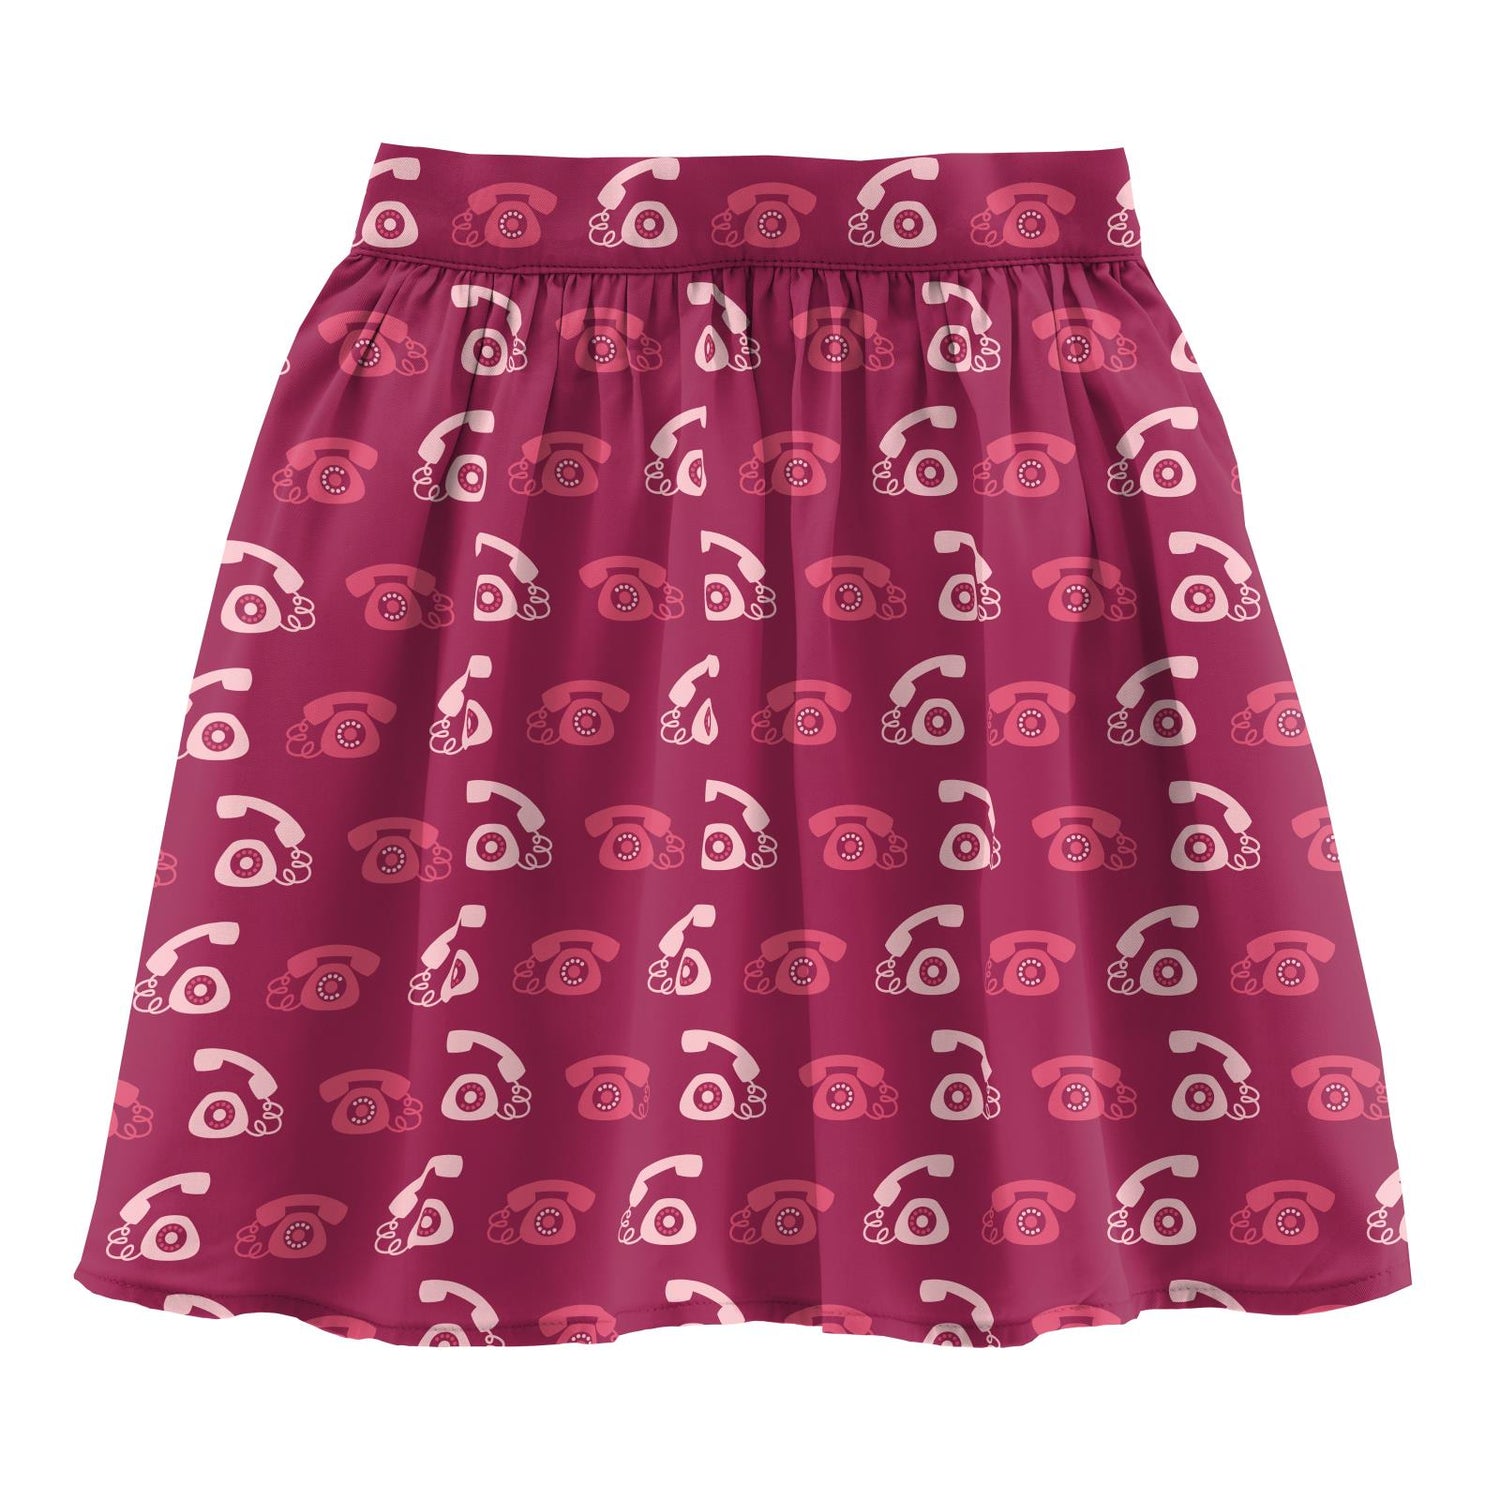 Print Woven Skirt in Berry Telephone